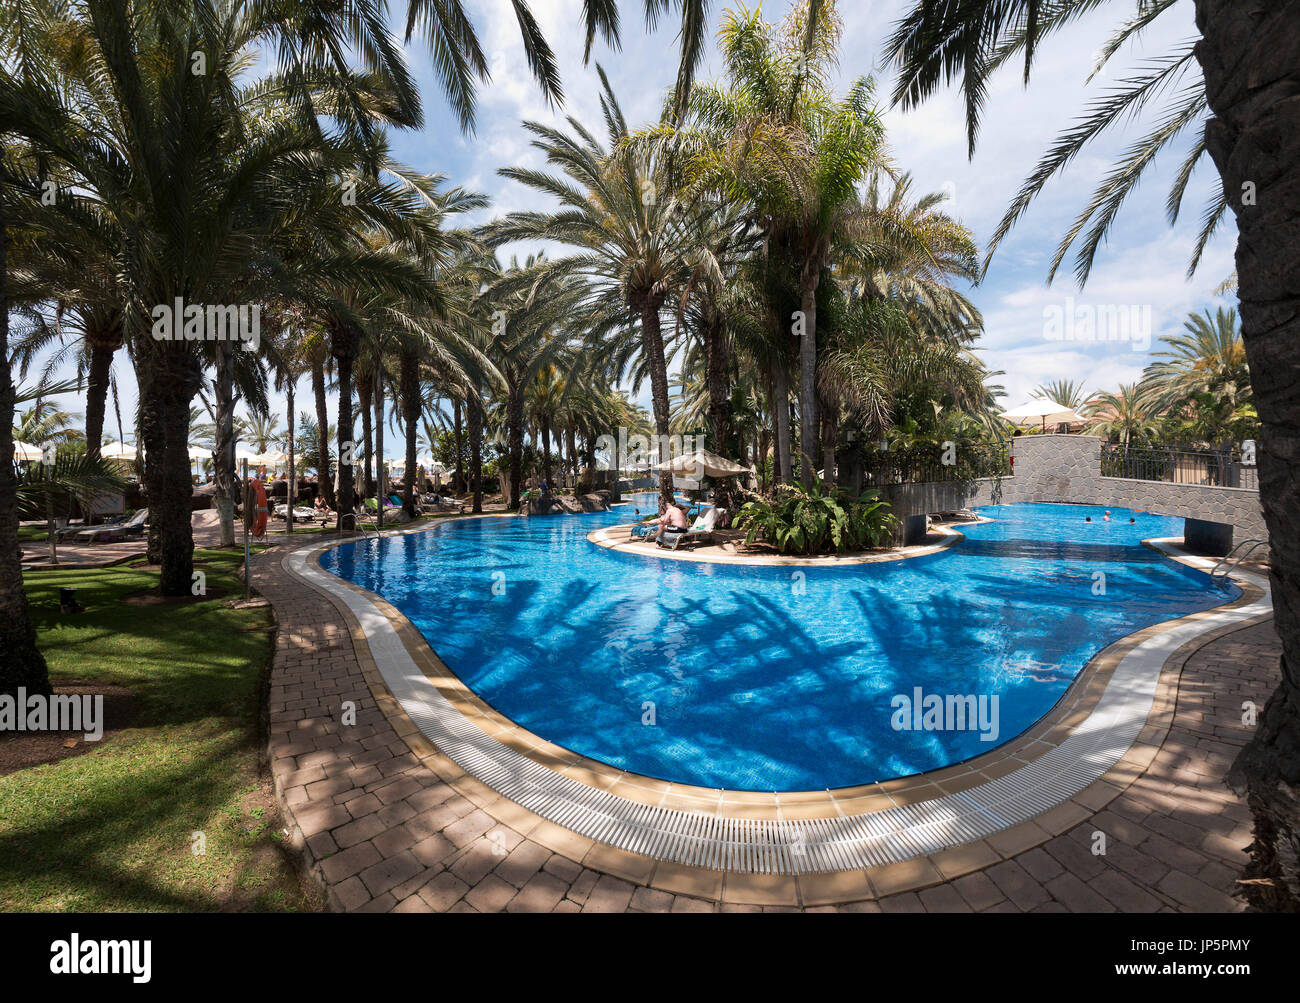 Lopesan Costa Meloneras 4-star resort hotel at Las Meloneras, near Mas Palomas, Gran Canaria Stock Photo